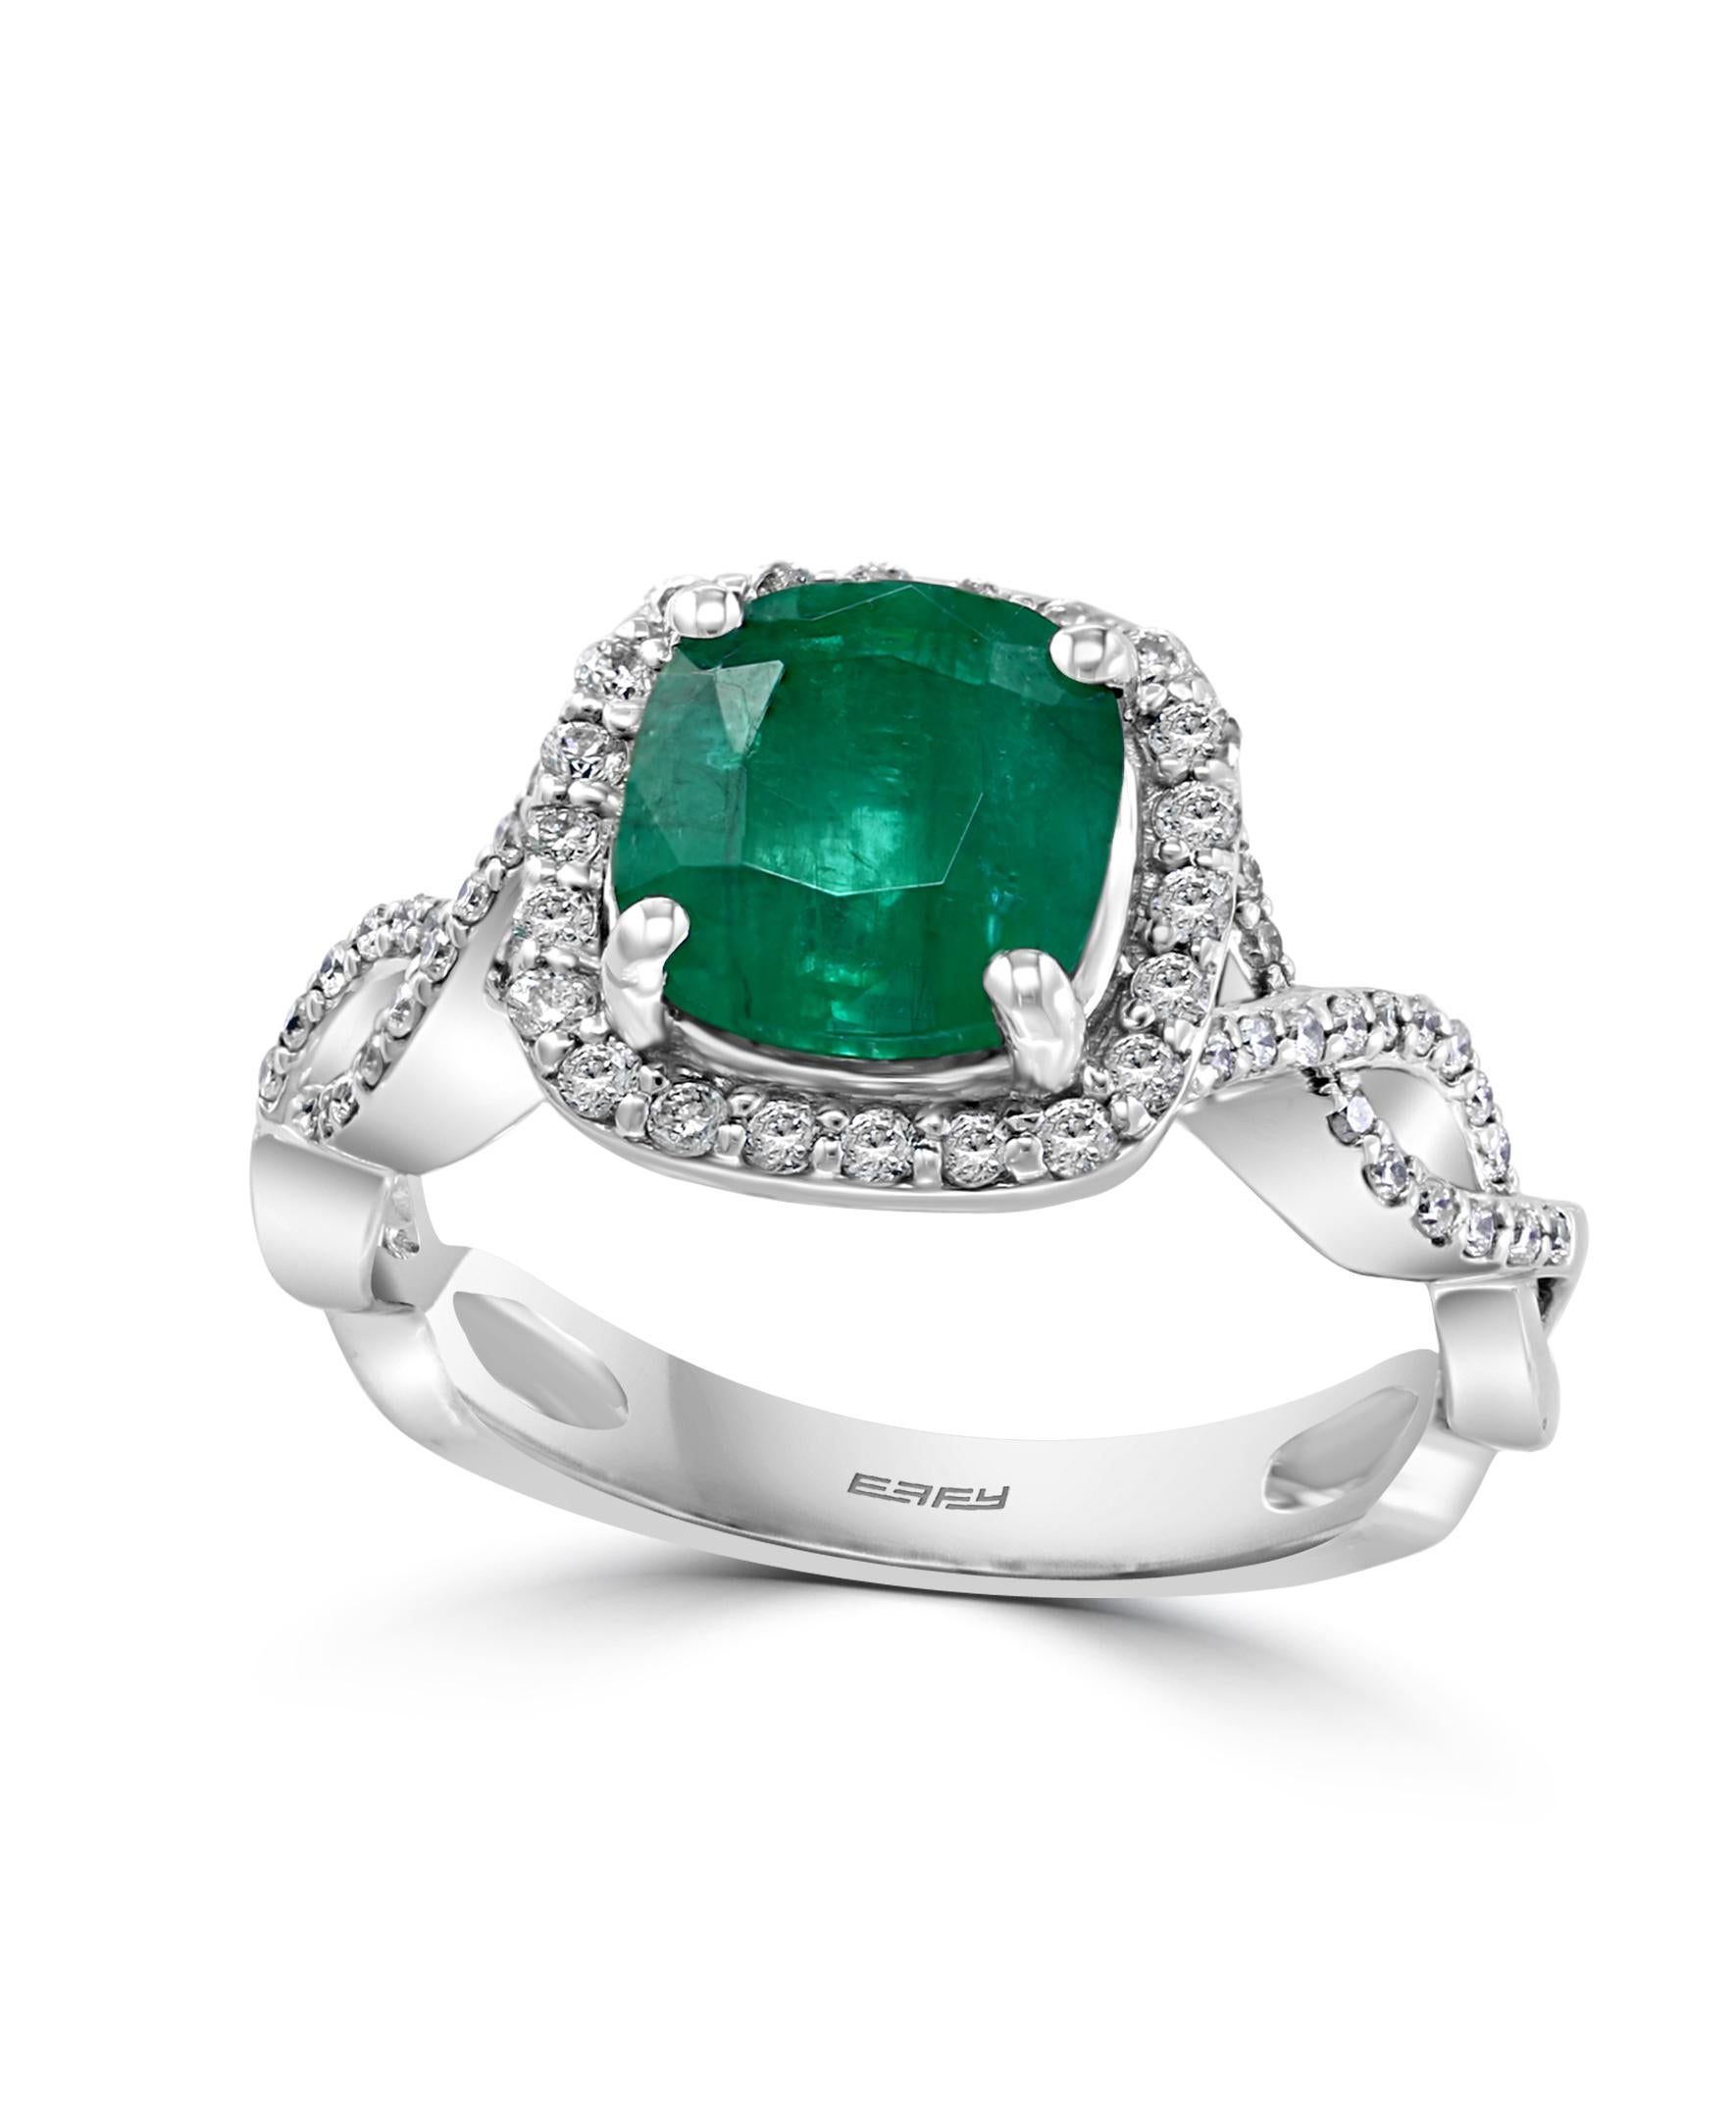 Round Cut Designer Effy's 1.8 Carat Emerald and Diamond Cocktail Ring 14 Karat White Gold For Sale